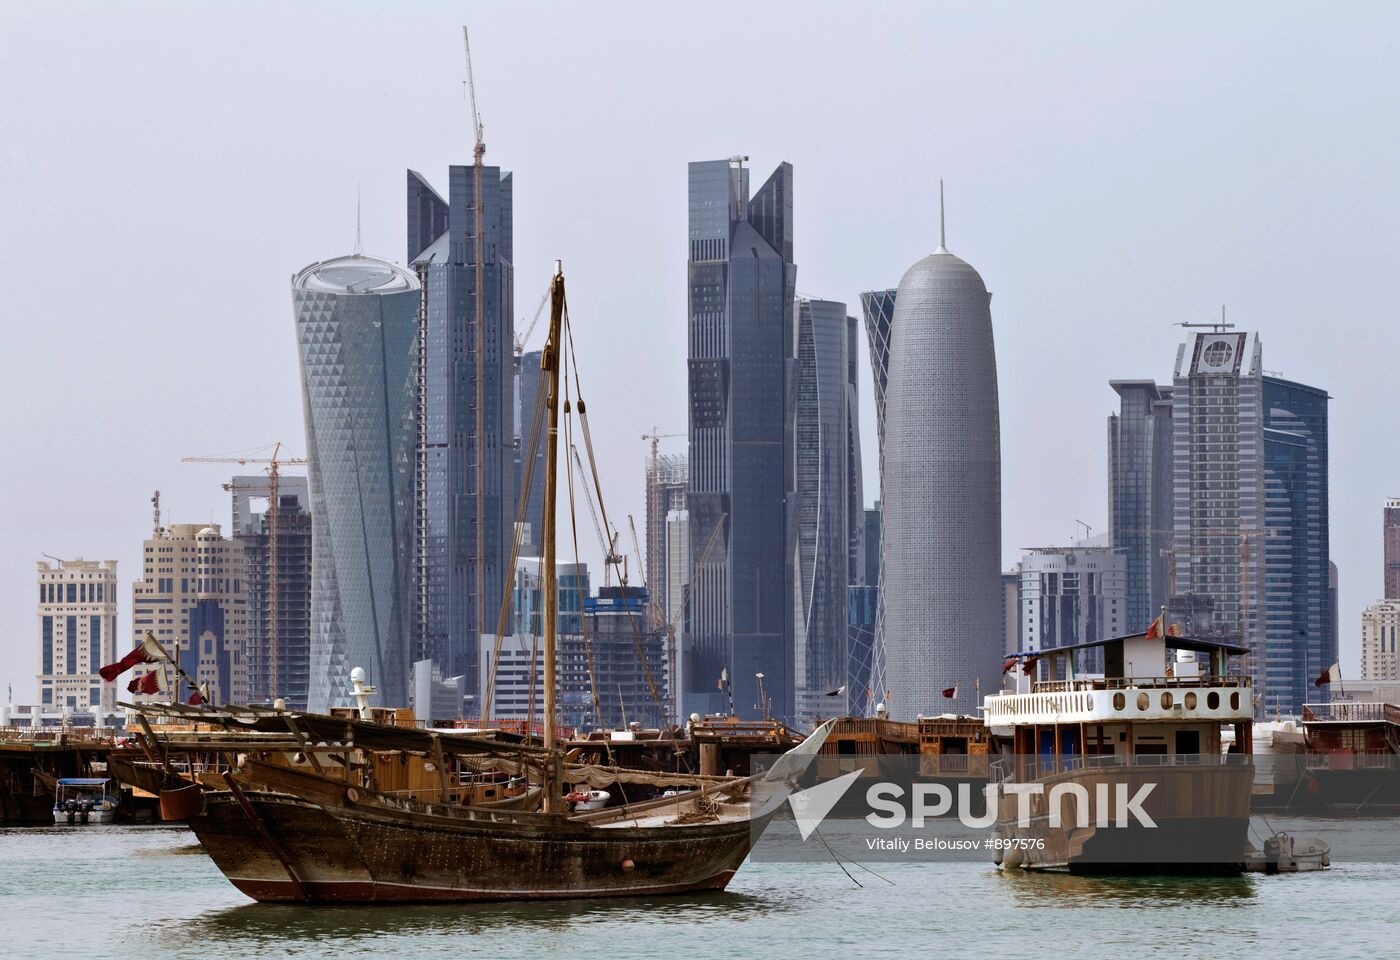 Sights of Qatar